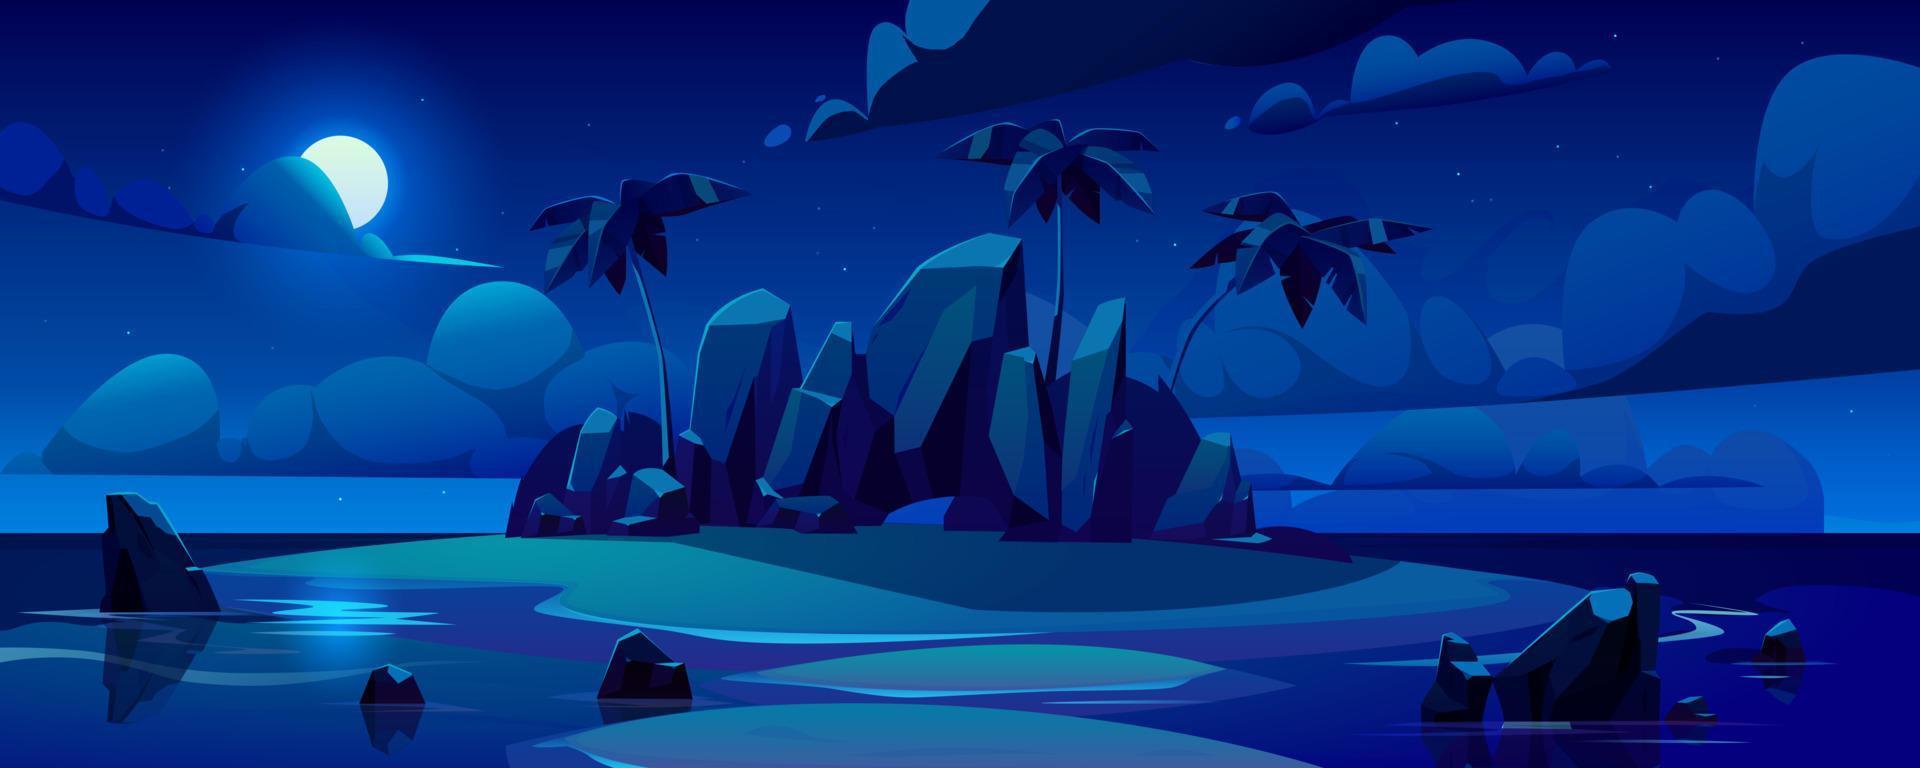 Vector night tropical island in ocean